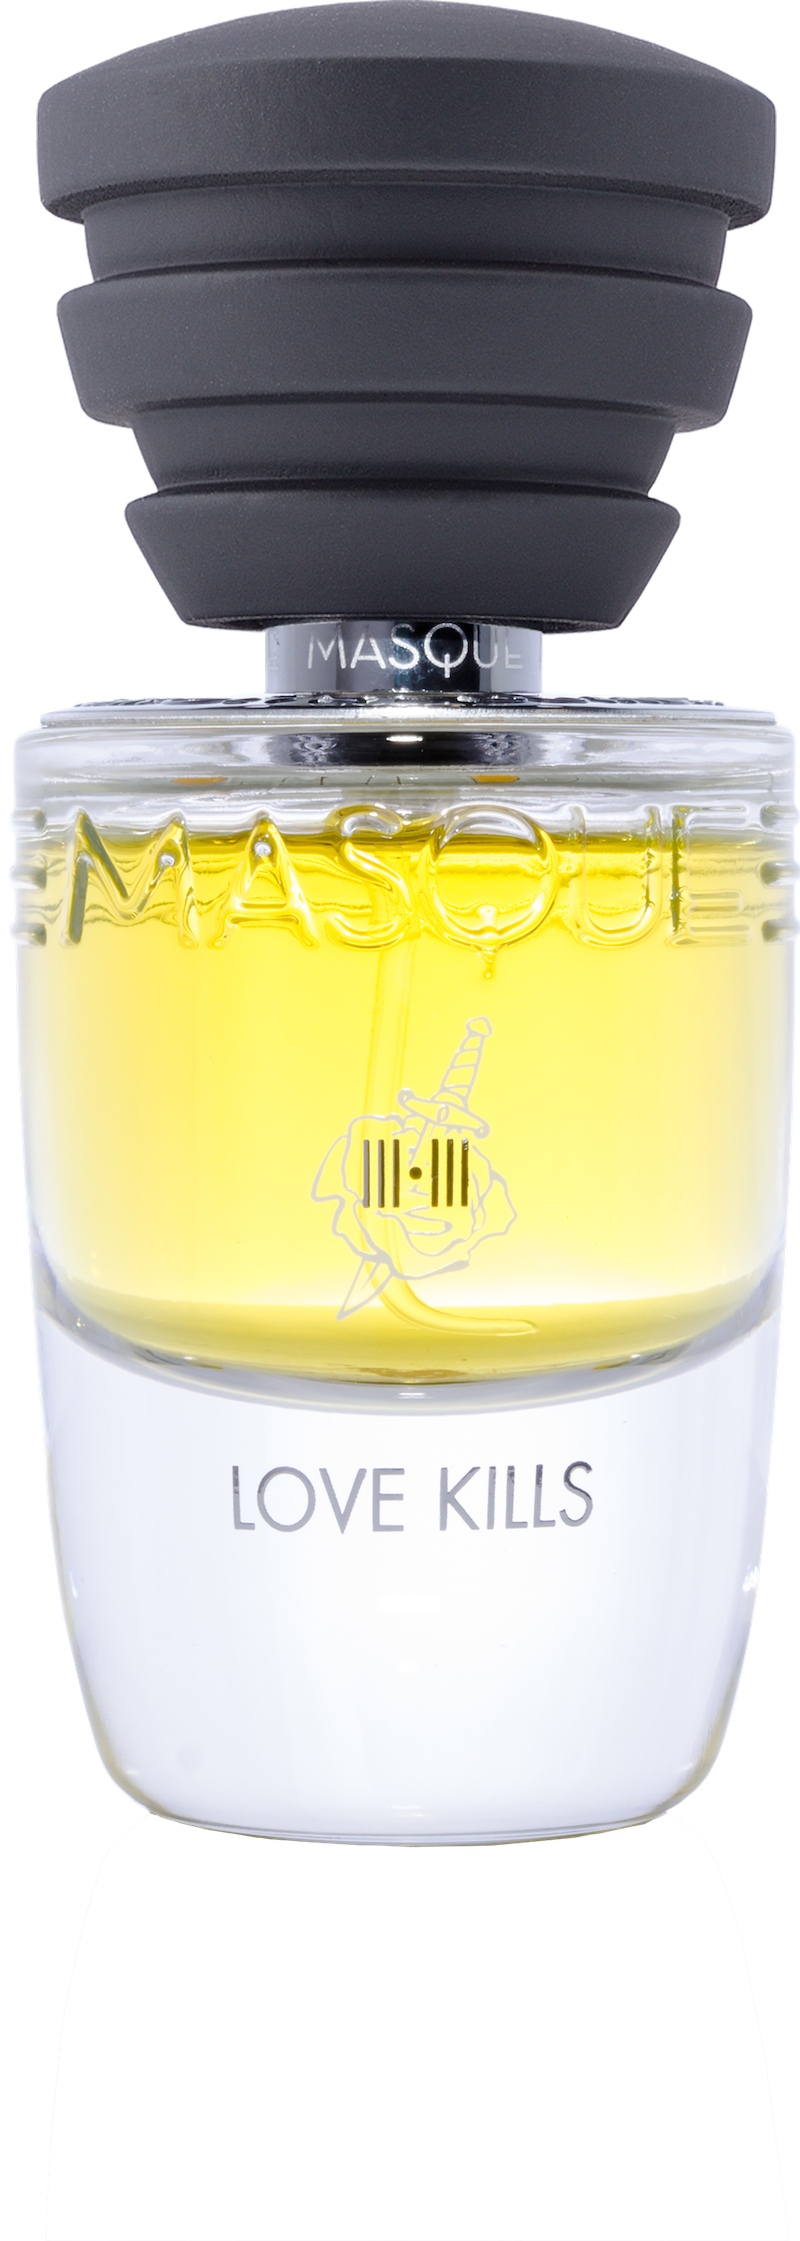 Masque Milano - Love Kills - Eau de Parfum 35 ml